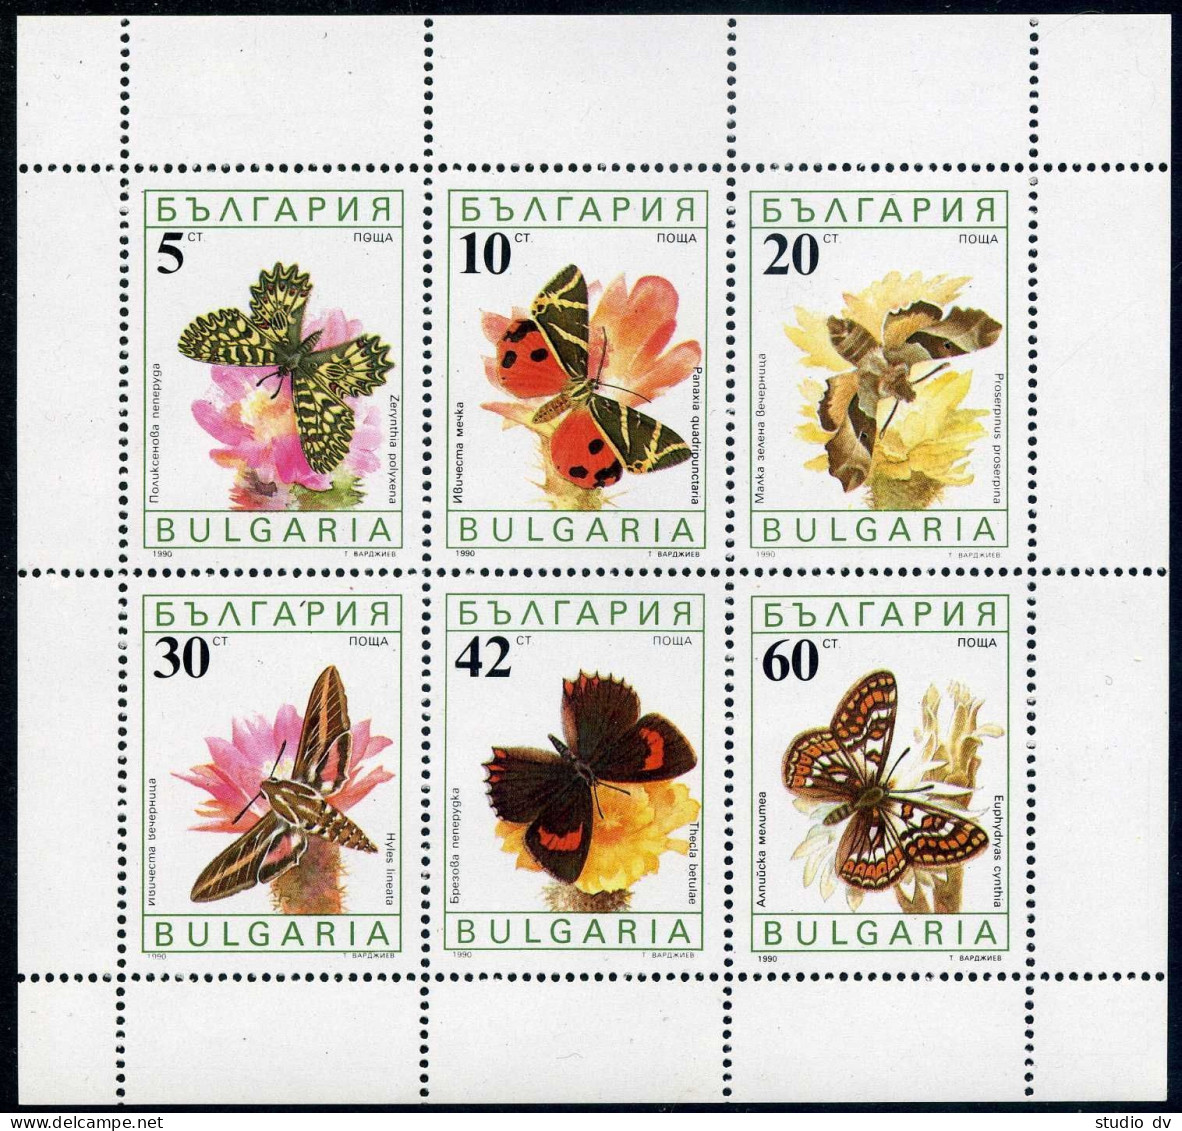 Bulgaria 3556a Sheet,MNH.Michel 3852-3857 Klb. Butterflies And Flowers 1990. - Nuevos